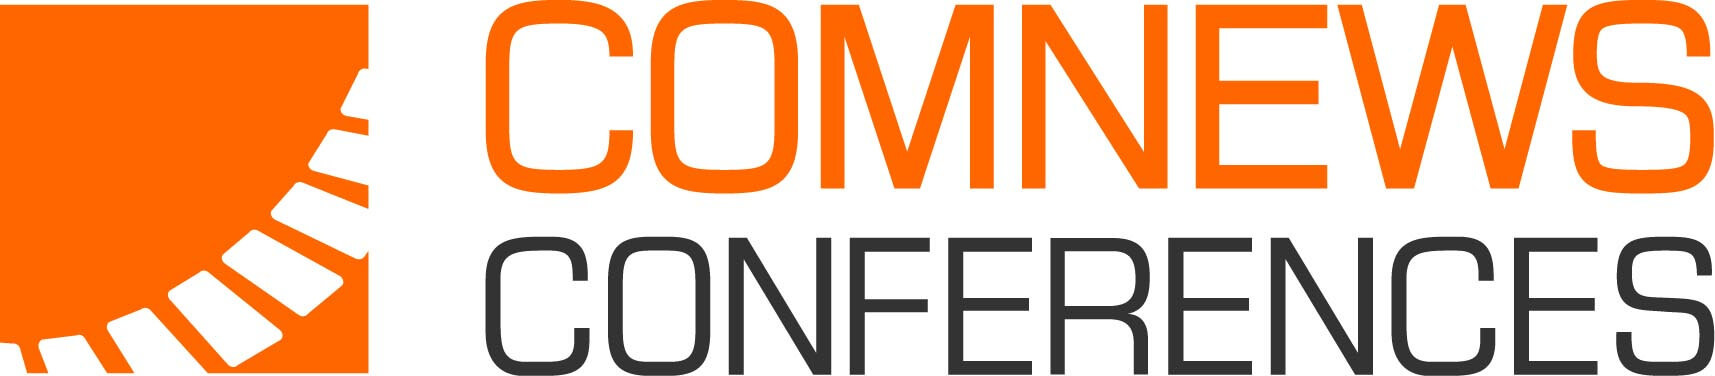 comnews-conferences